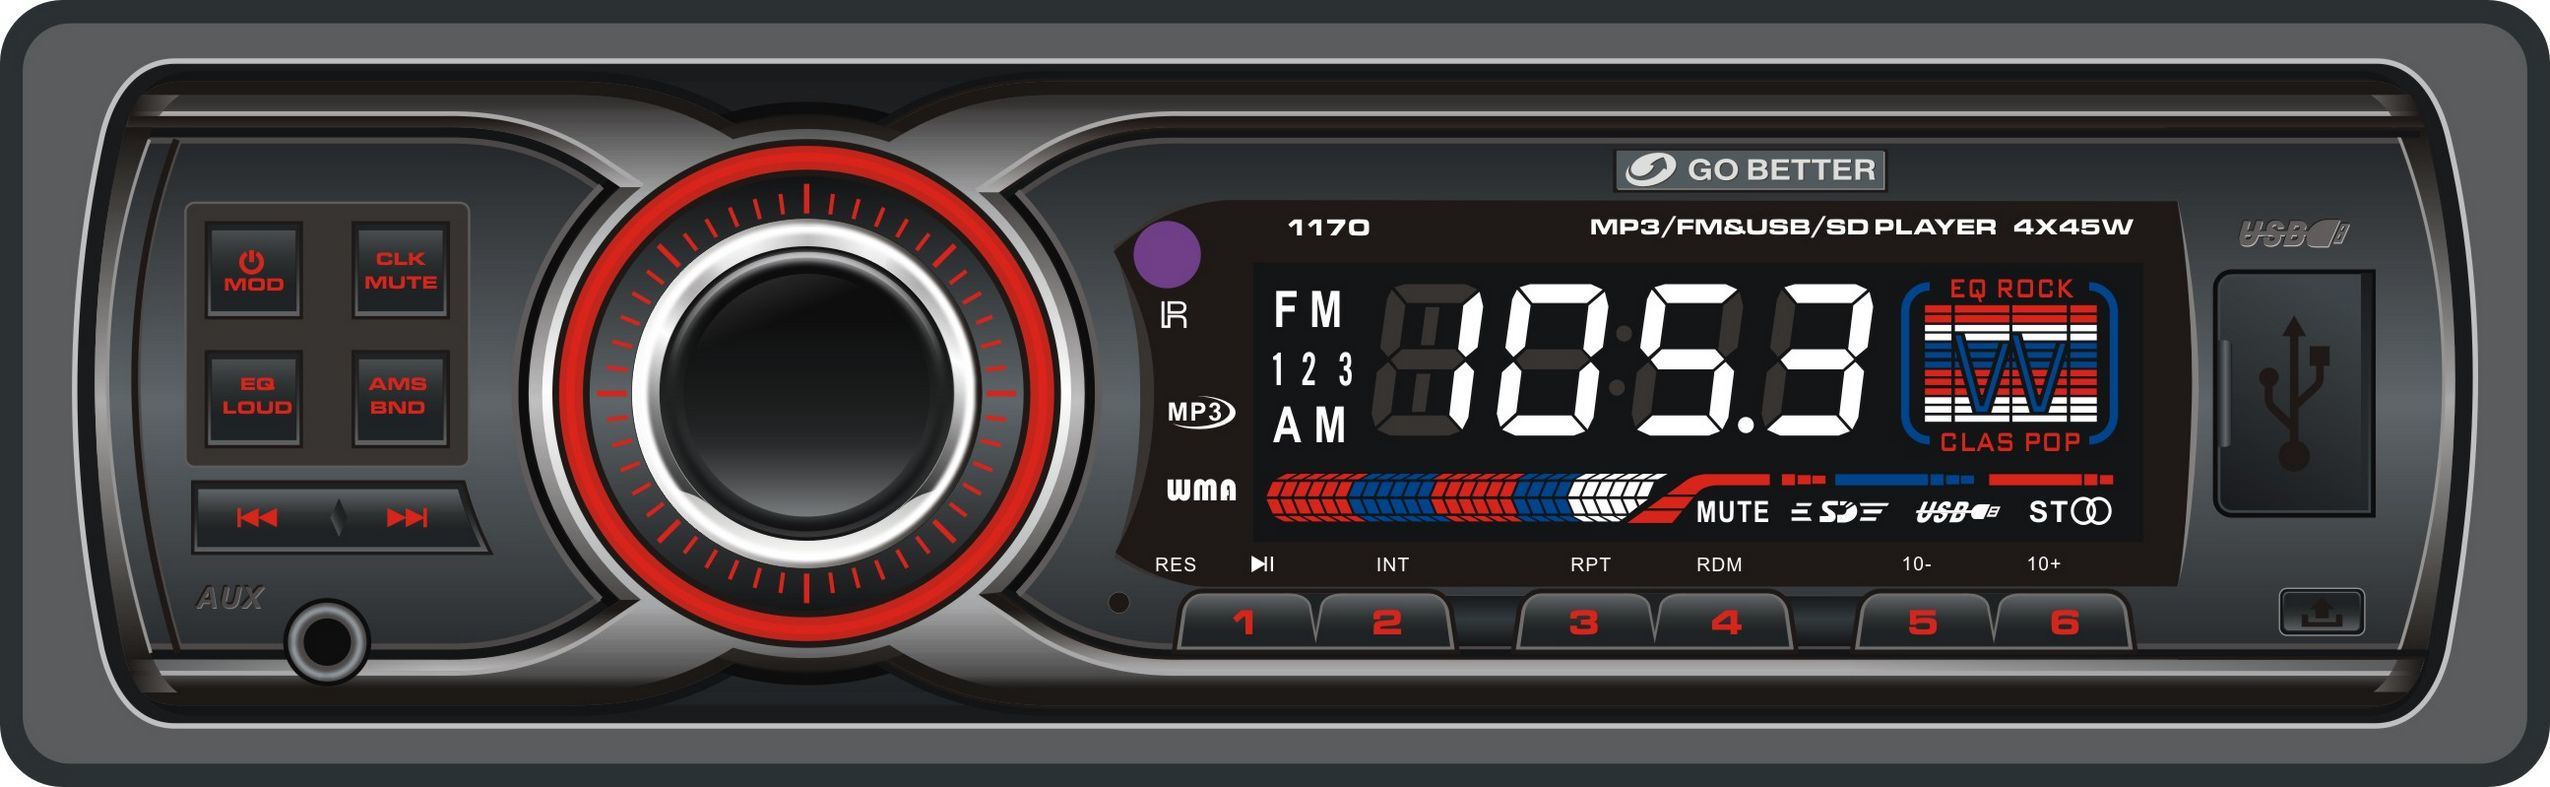 Car MP3 Player (GBT-1170)